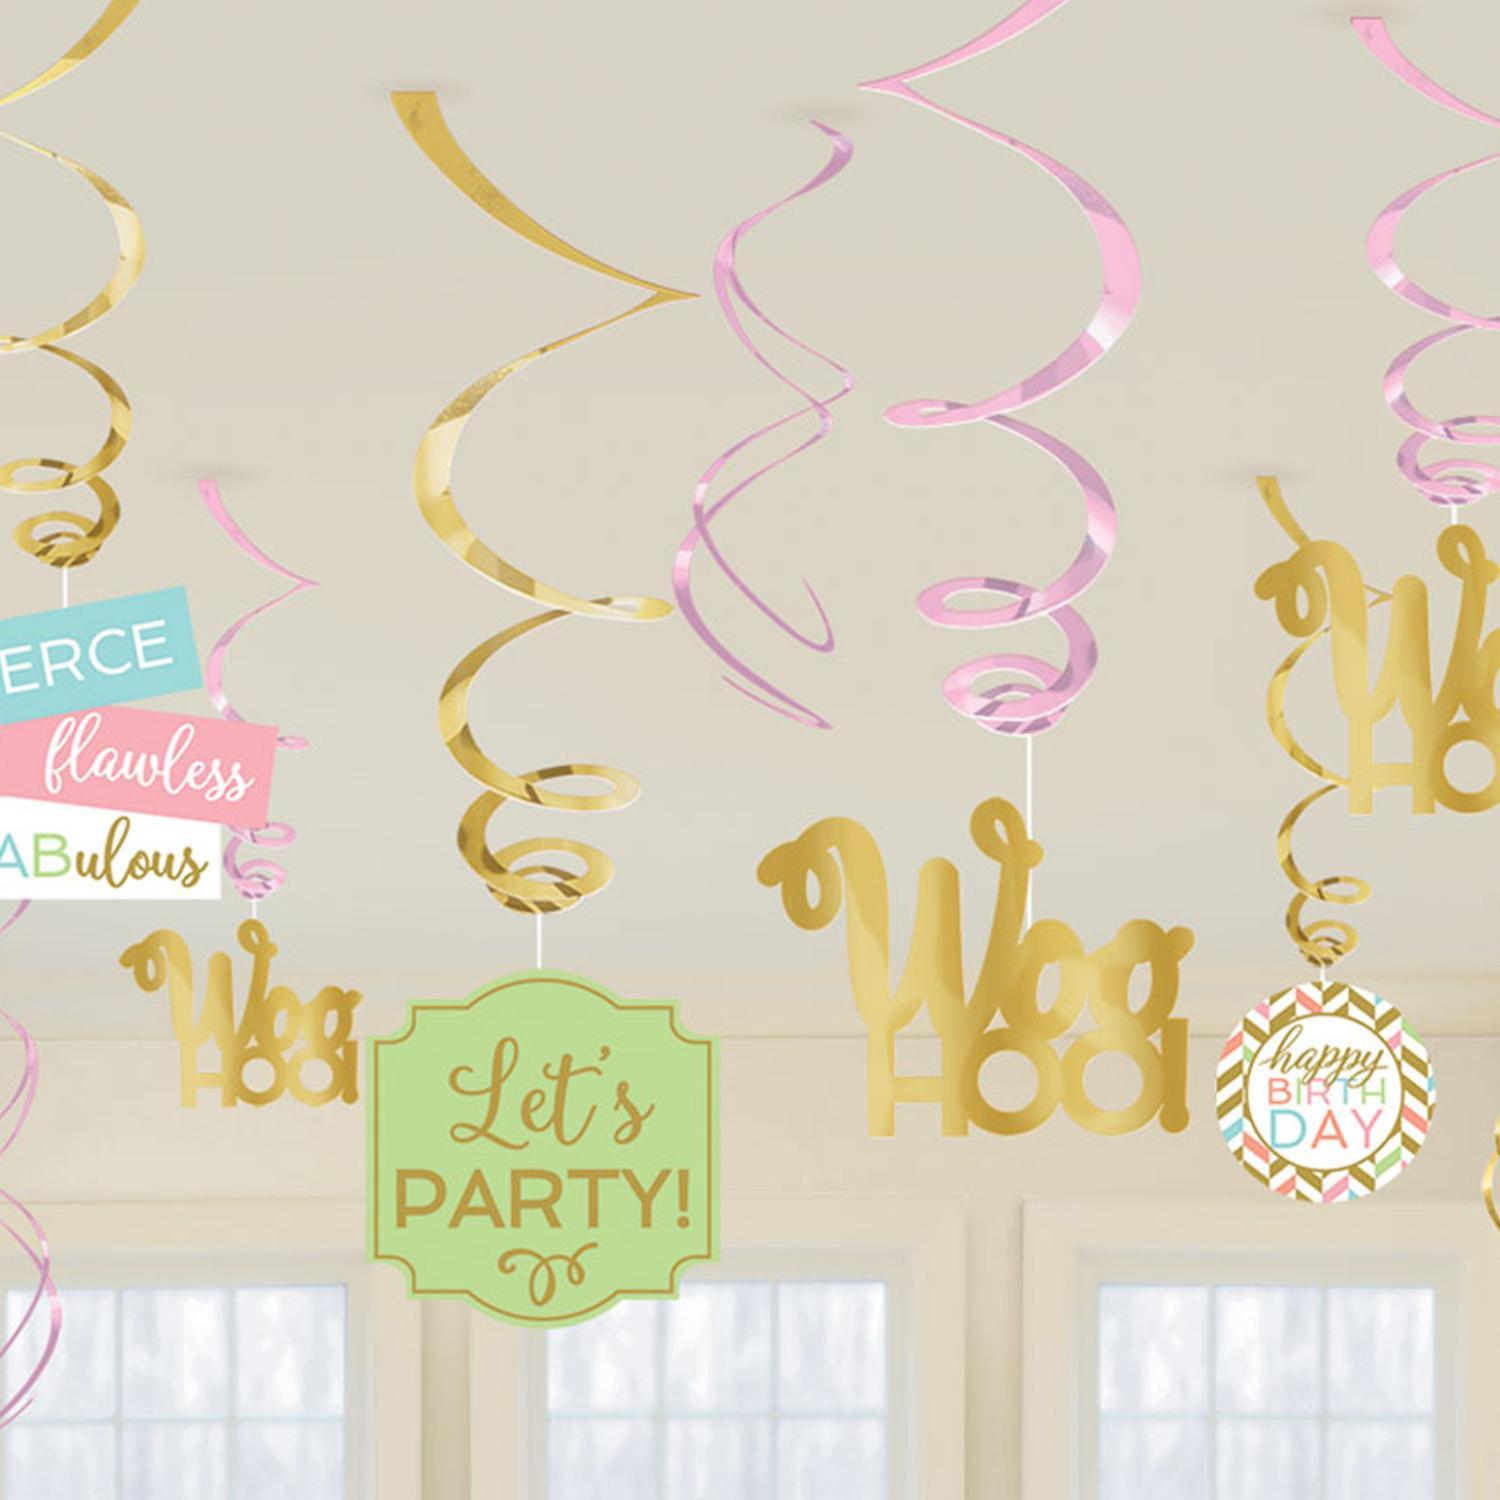 Confetti Fun Foil Swirl Decorations 12pcs Decorations - Party Centre - Party Centre